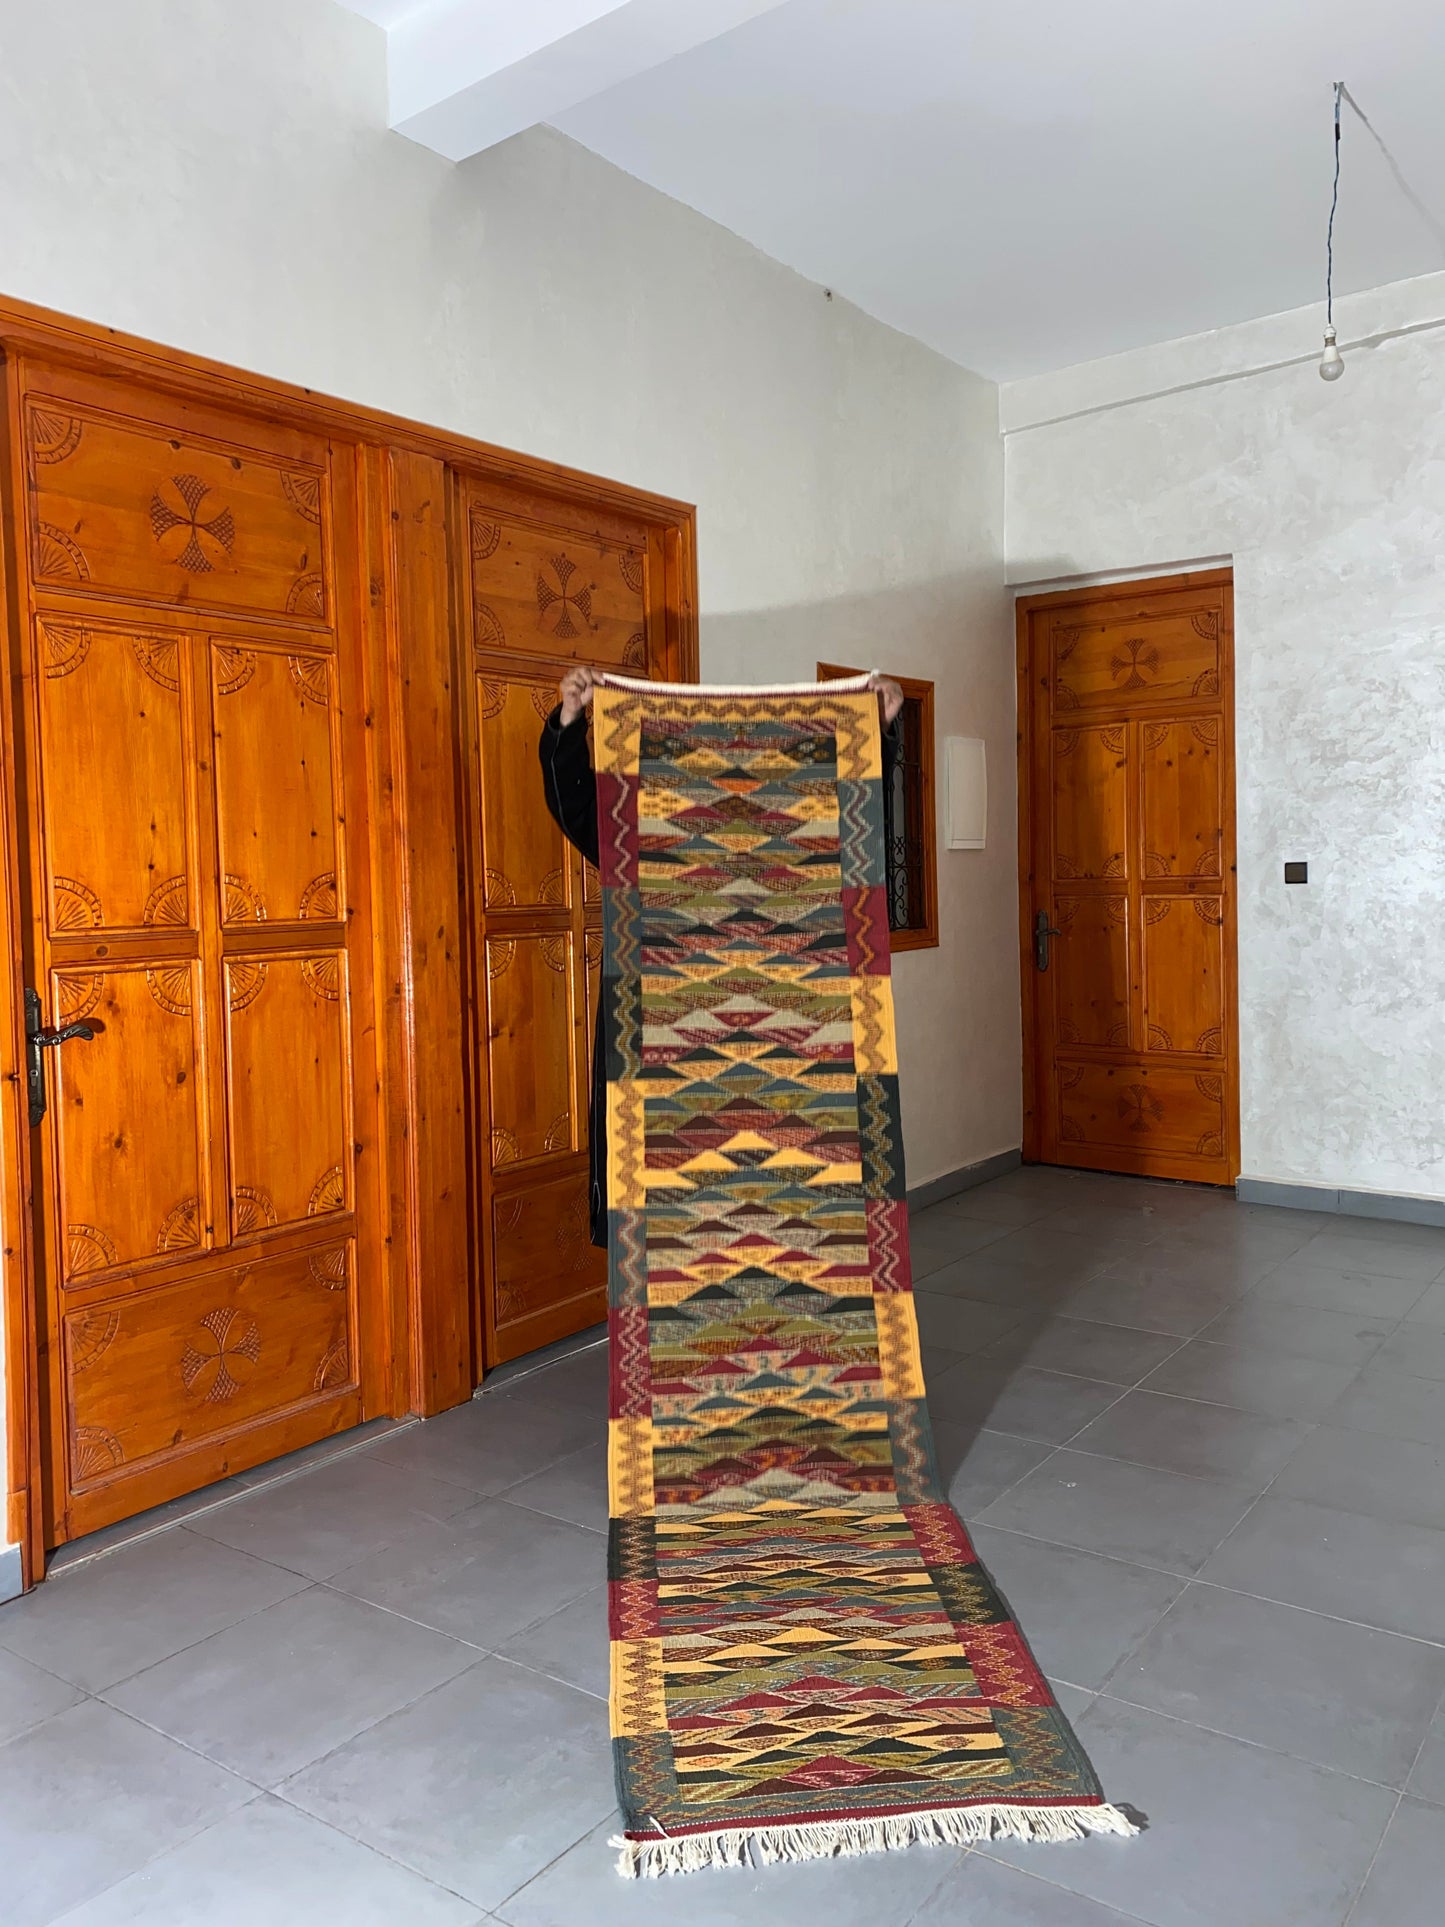 Moroccan  Kilim  handmade 100%wool berber  rugs.  size is  295x070 cm